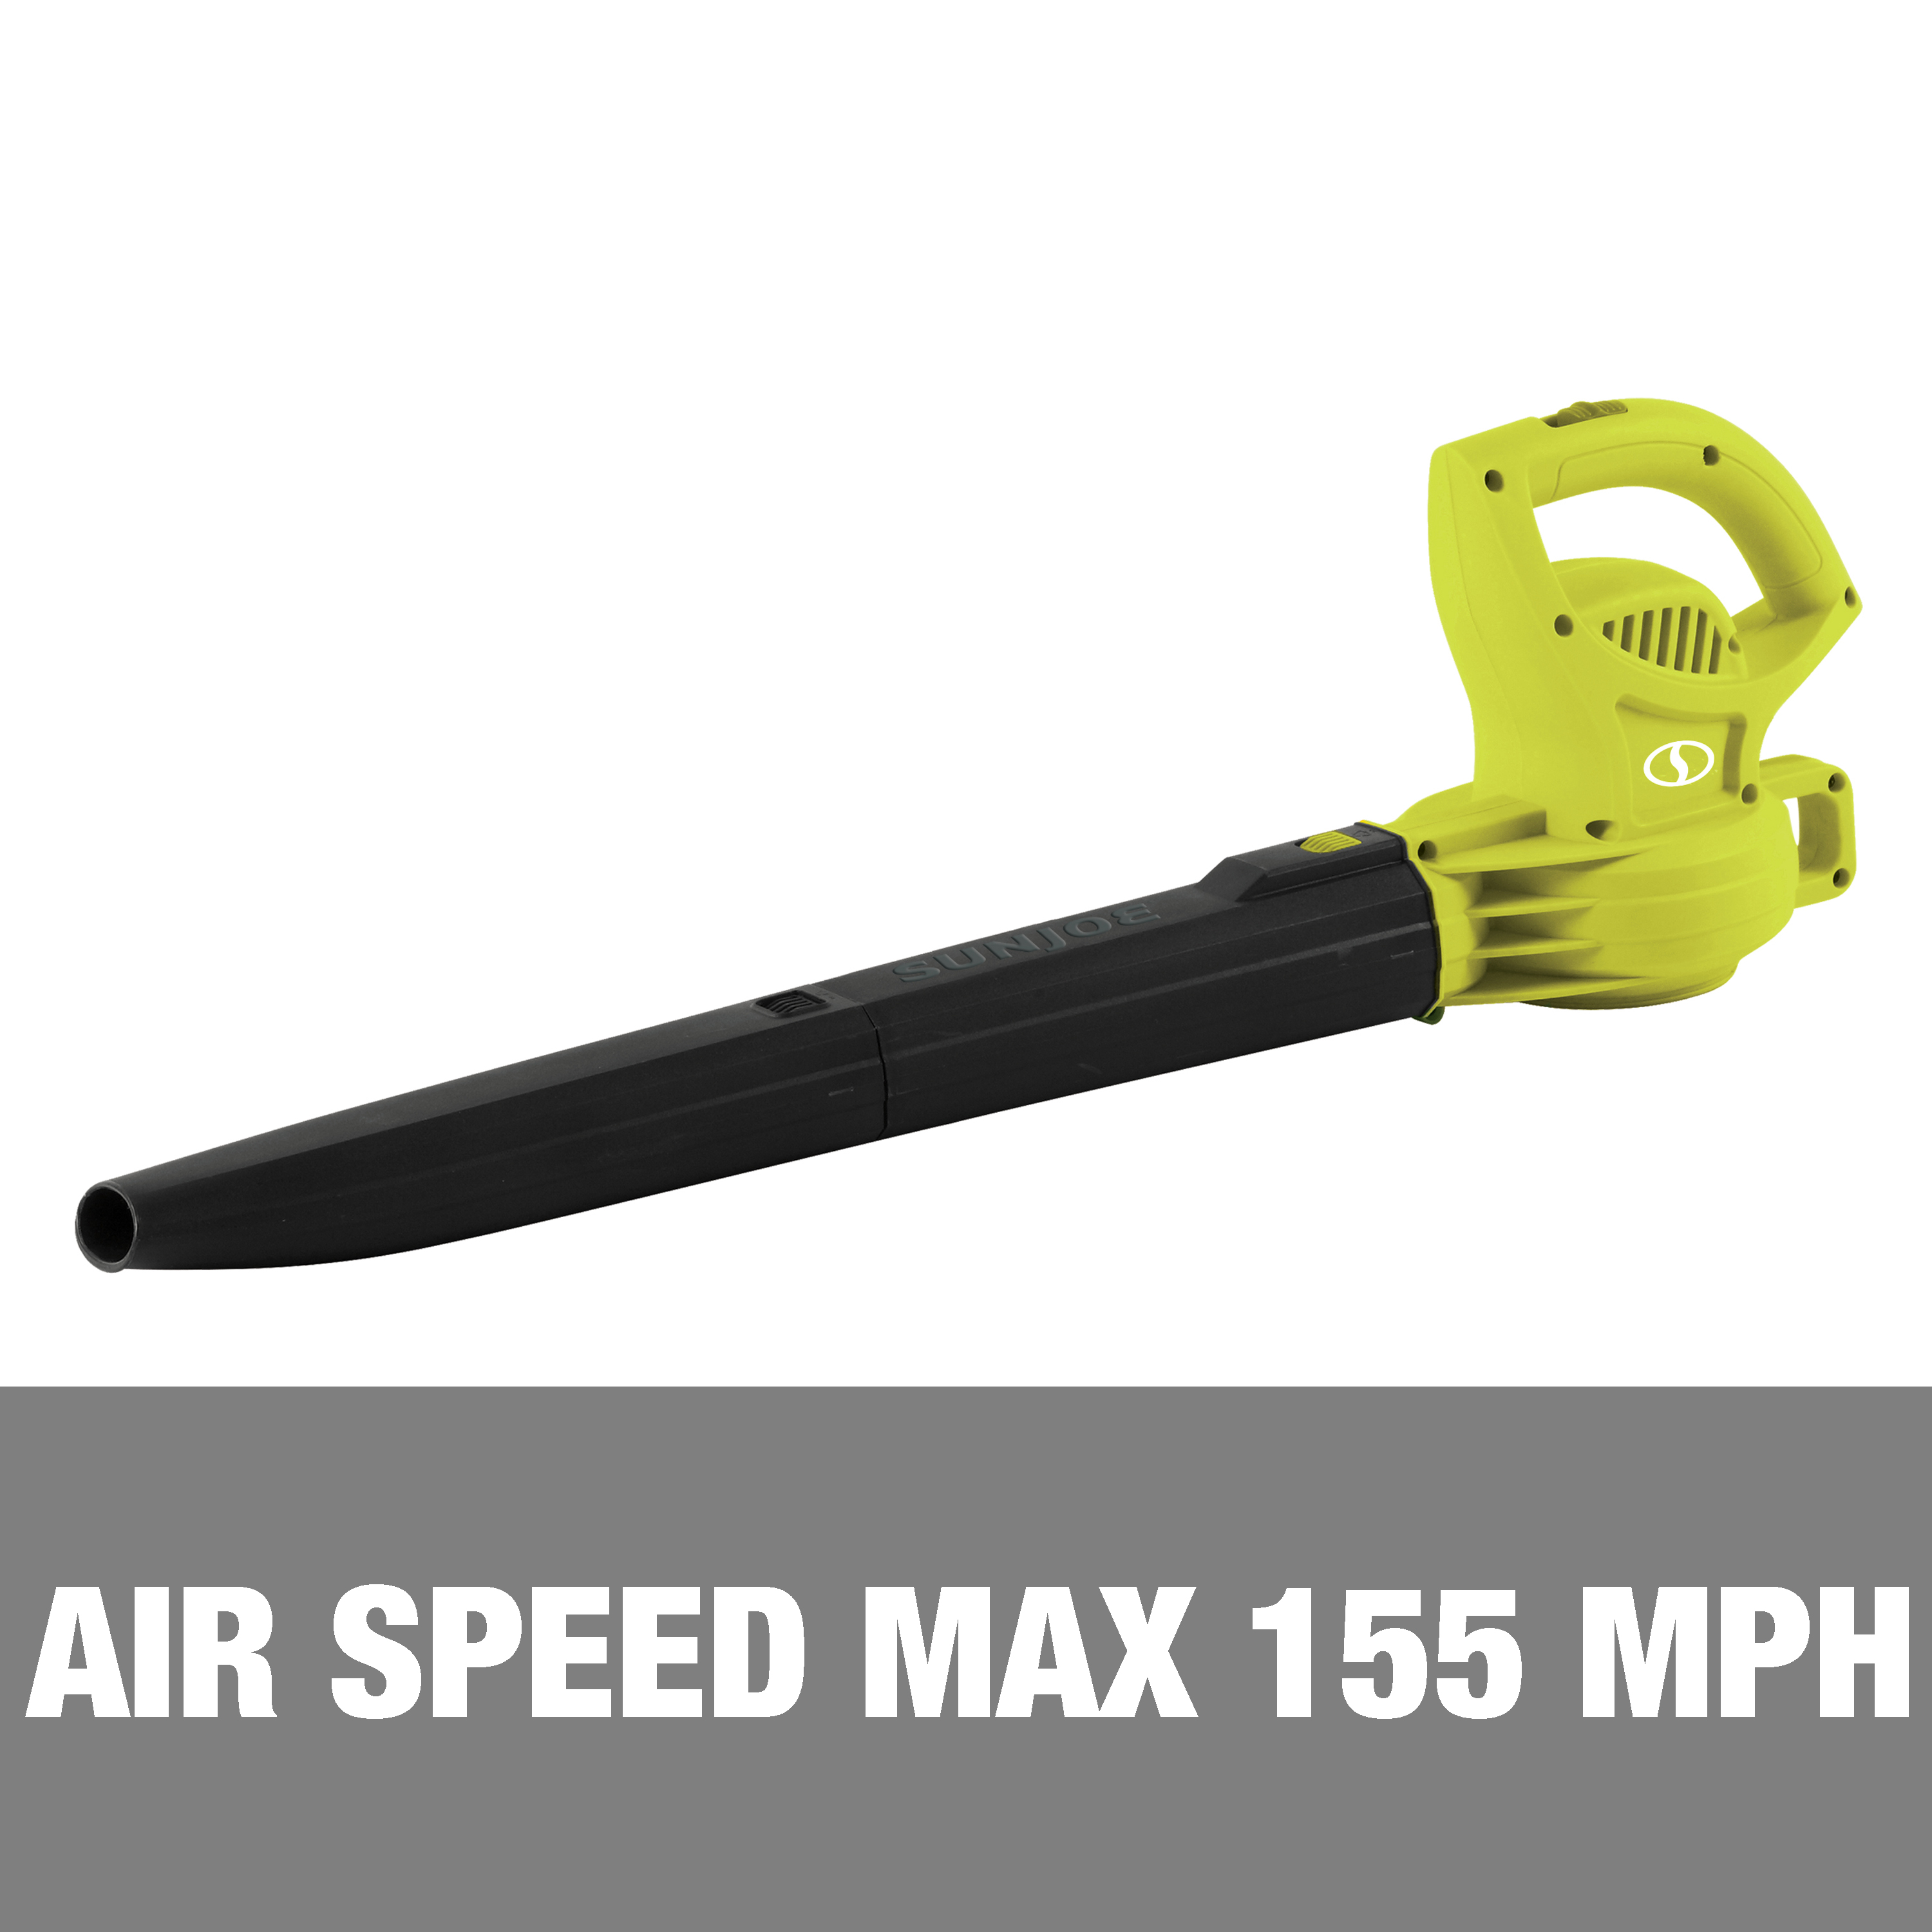 Sun Joe All-Purpose Electric Leaf Blower, 6-Amp, 155-mph, 260-CFM - Green - image 4 of 11